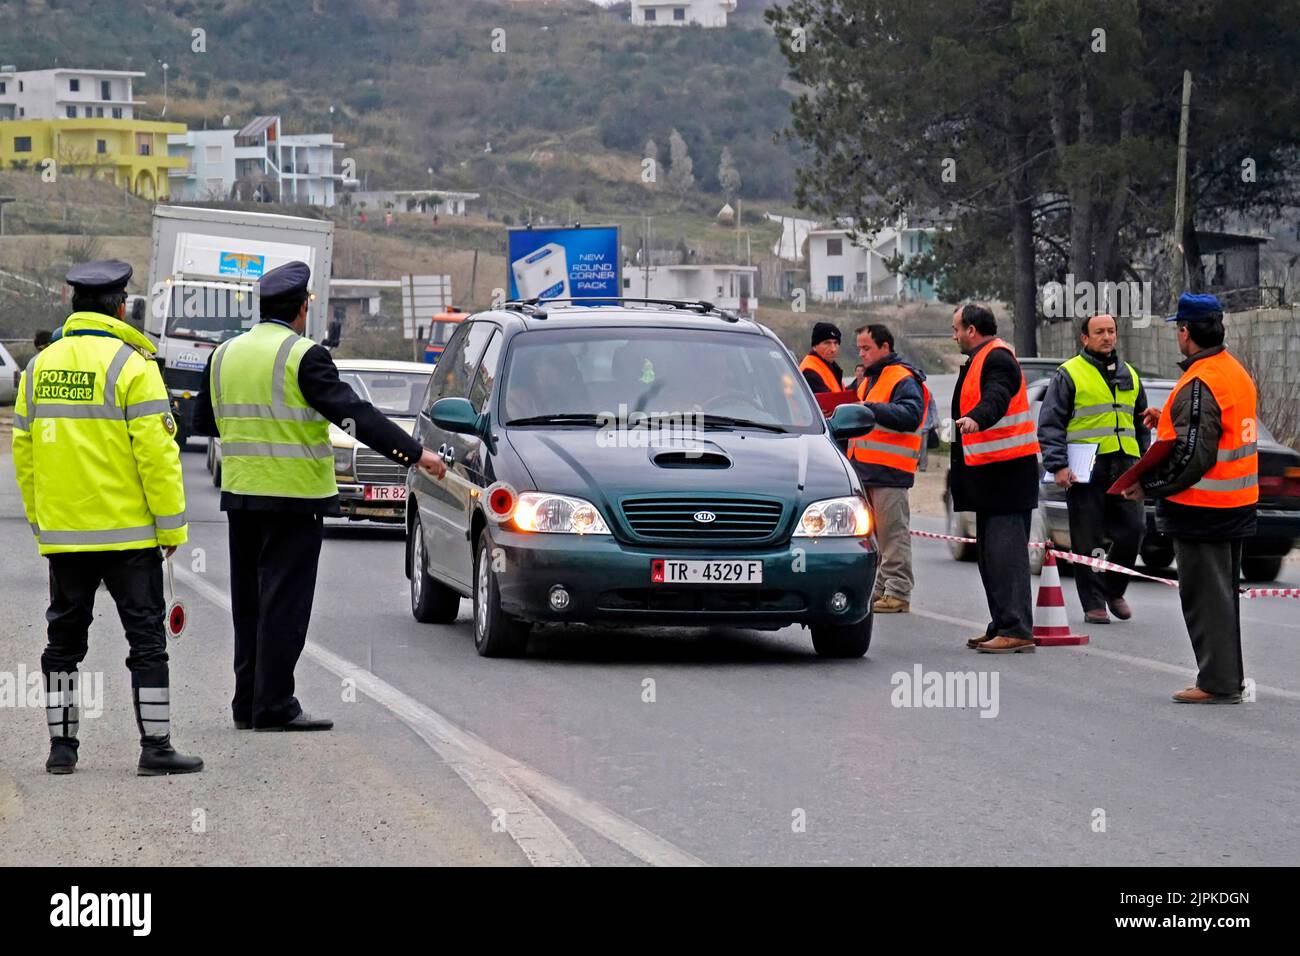 Partizani-Tirana match tomorrow, police action plan: Roads that will be  blocked - Aktualitet